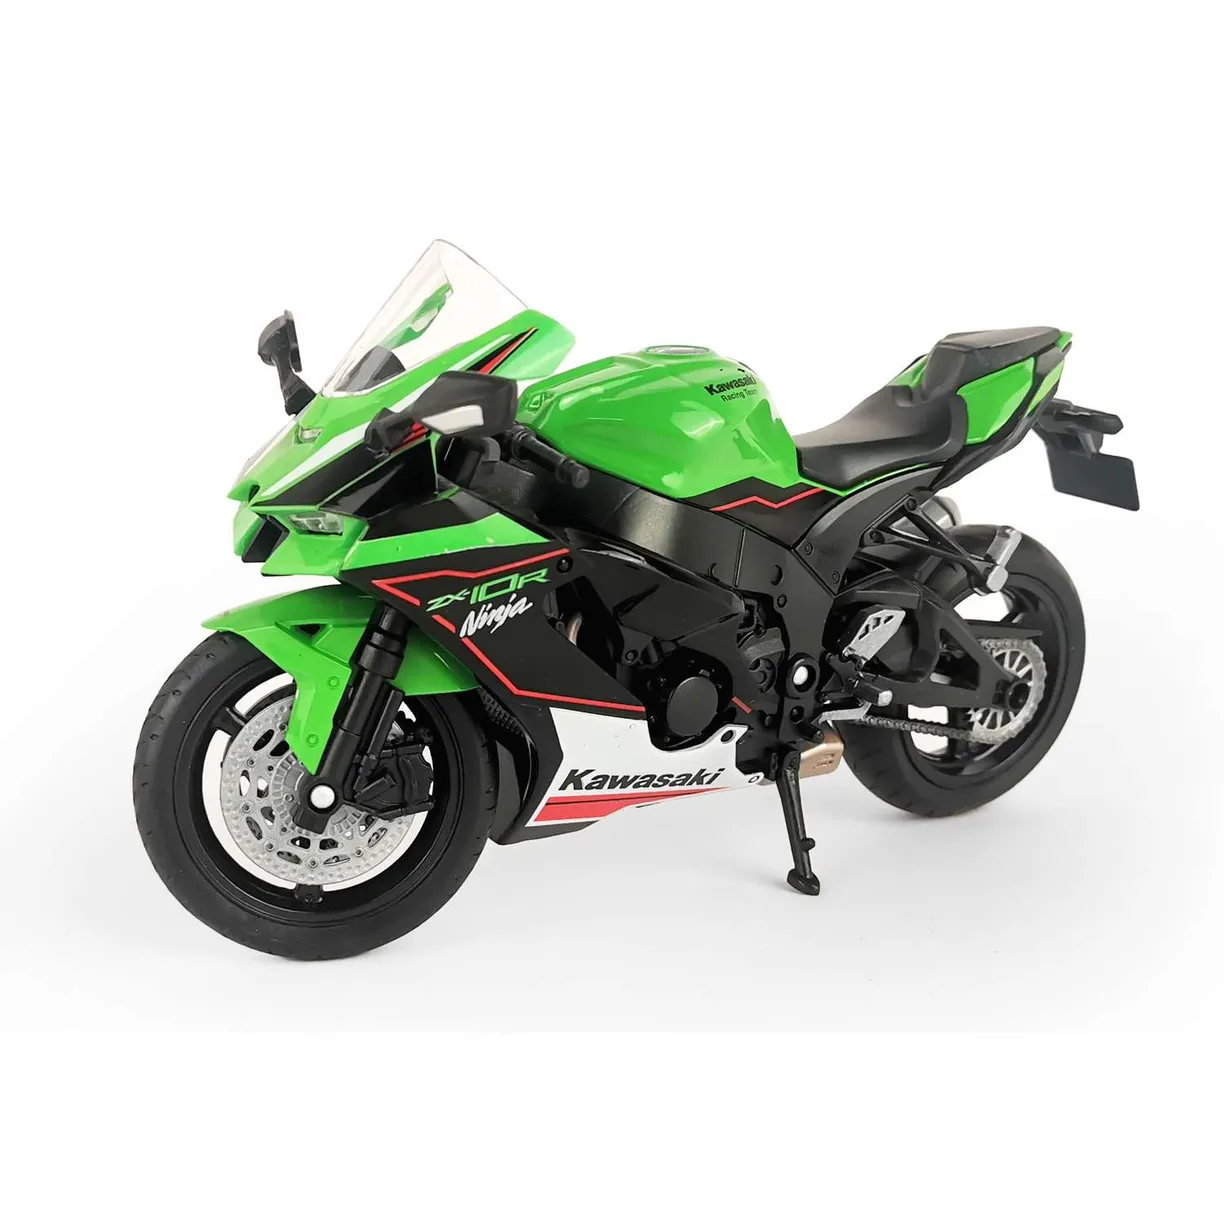 Мотоцикл Welly 1:12 Kawasaki Ninja ZX-10R зеленый motorcycle oil filter for kawasaki z1000 z1000a z 1000 zr1000 zr 1000 zx 10r zx10r zx 10r zx1000 zx1000c zx ninja 1000 ninja1000